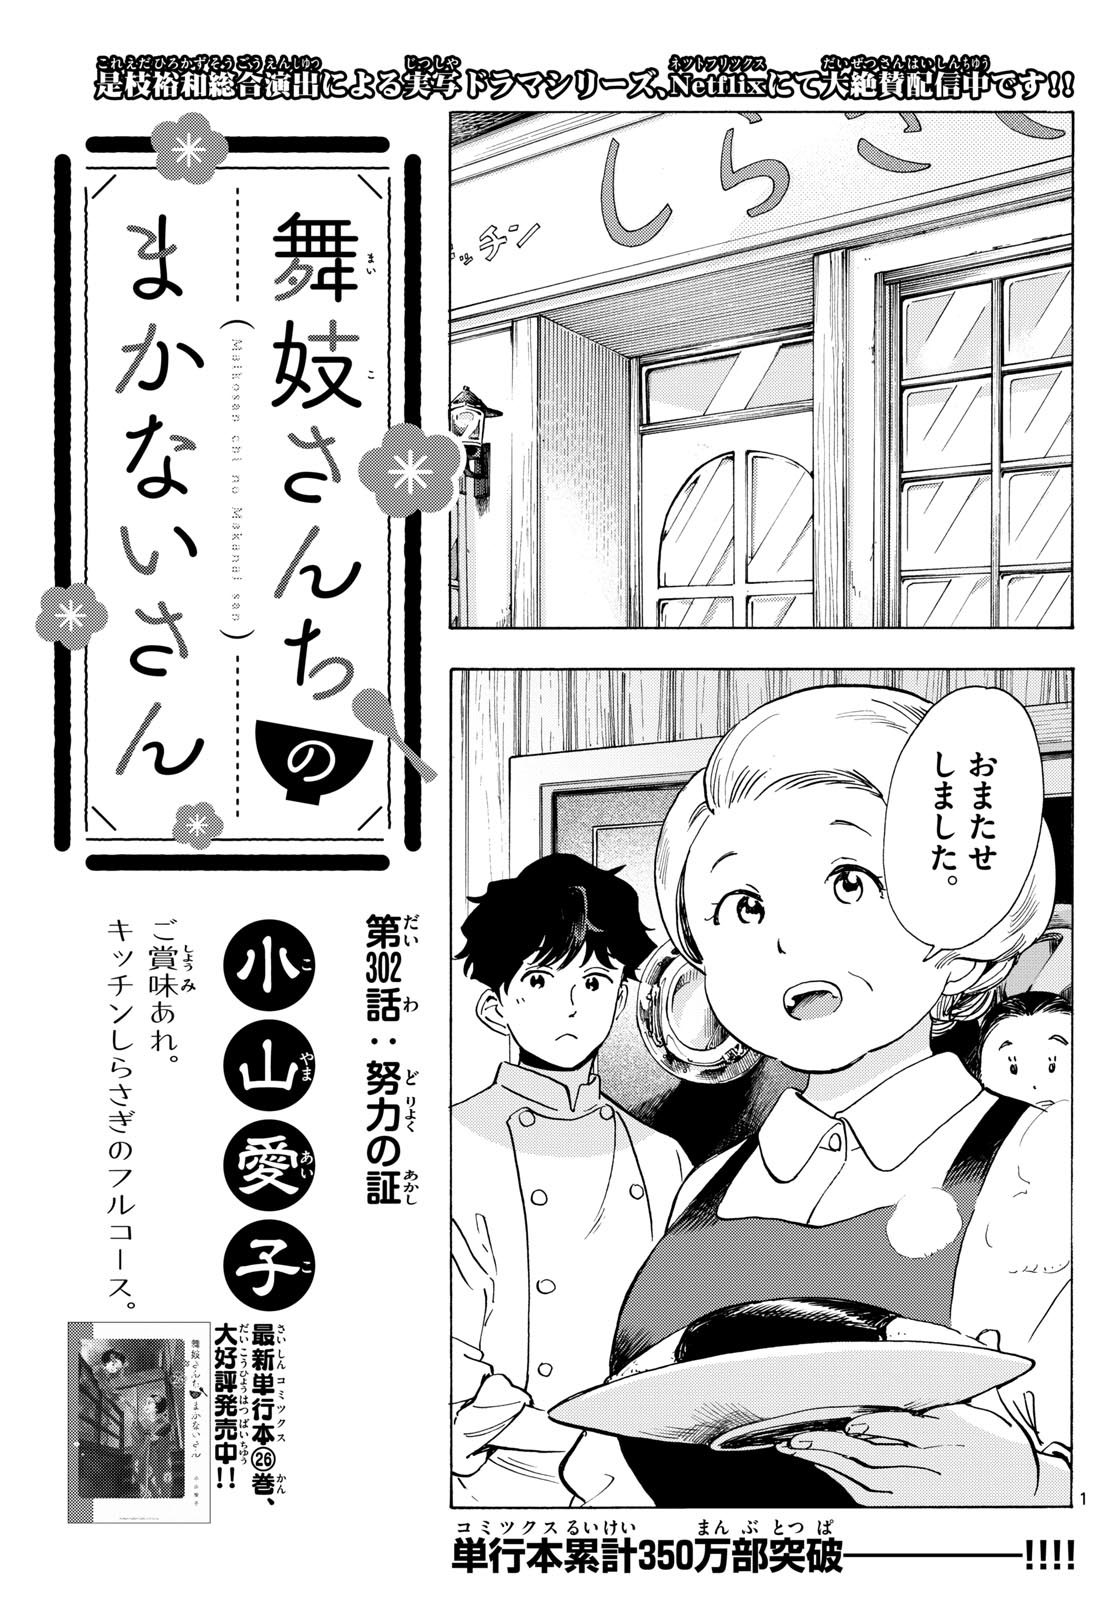 Maiko-san Chi no Makanai-san - Chapter 302 - Page 1